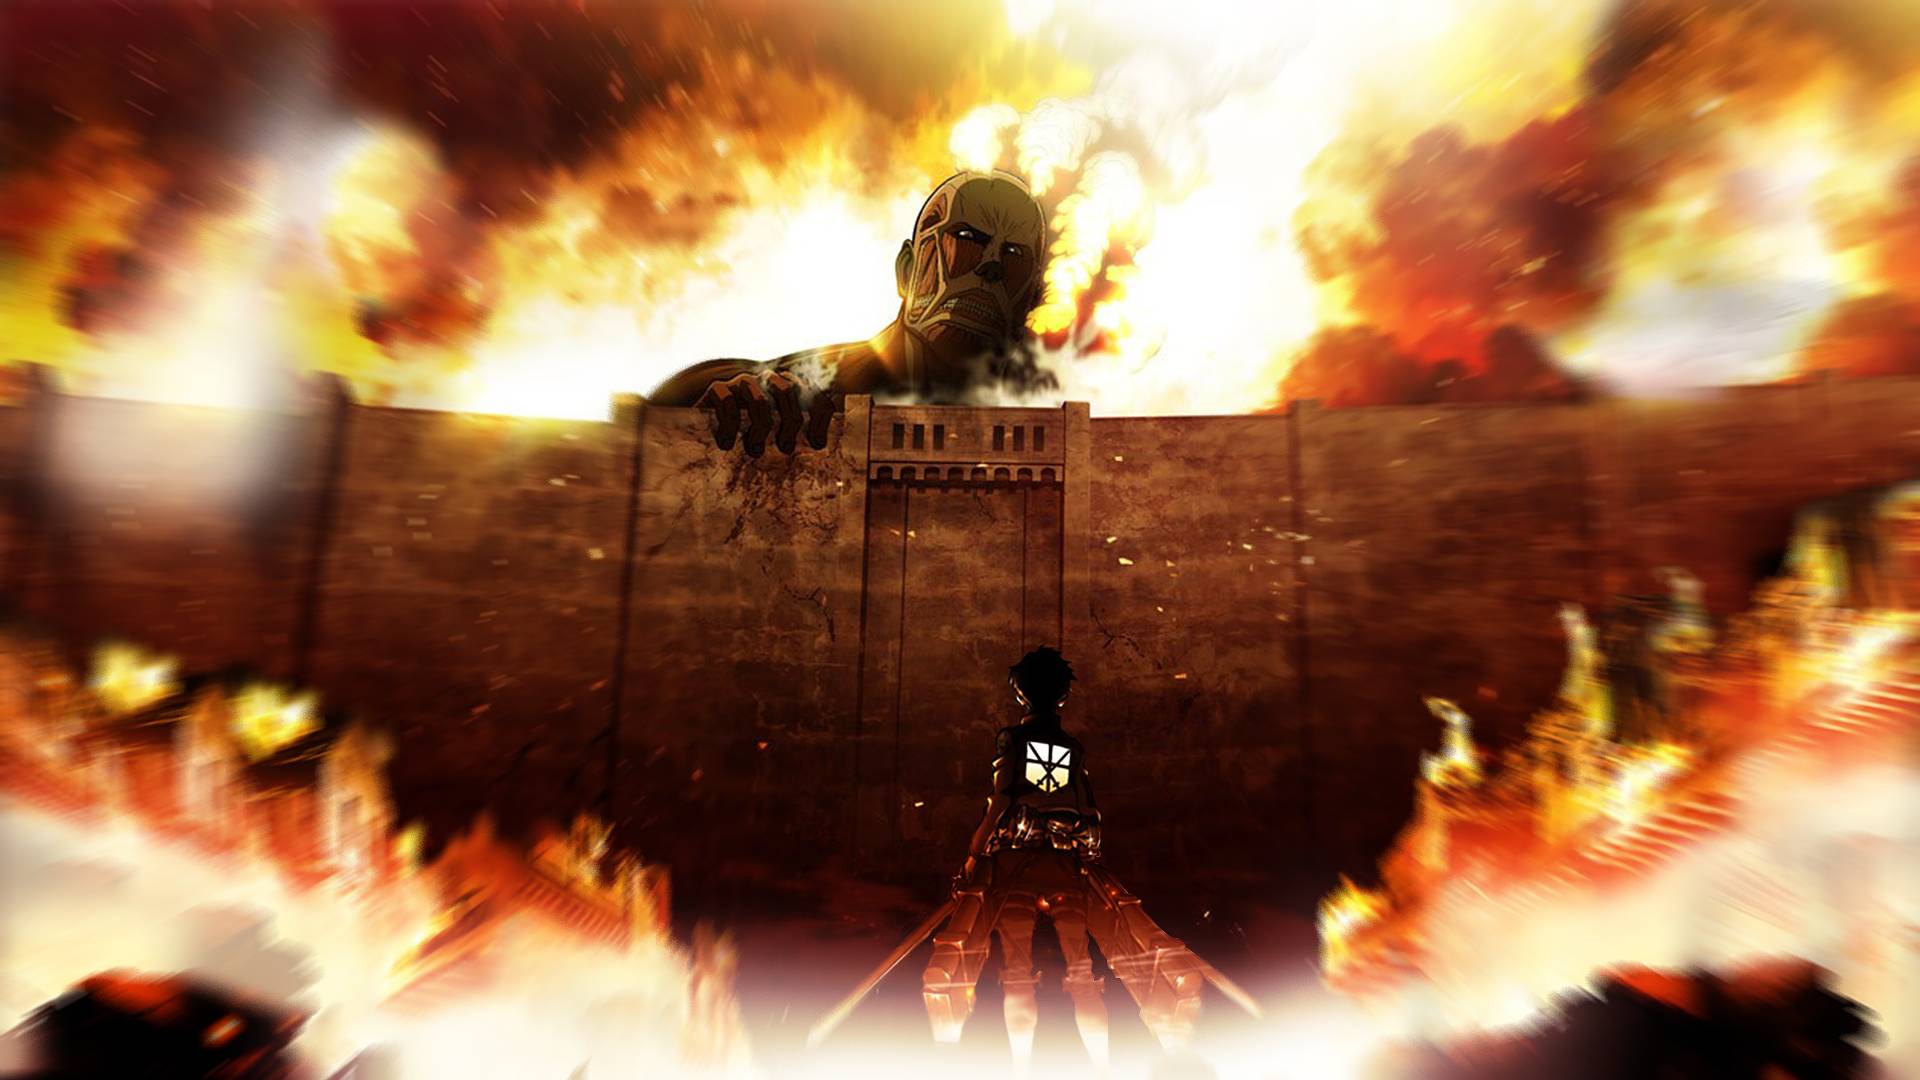 Titan on Wall Attack on Titan teams Background